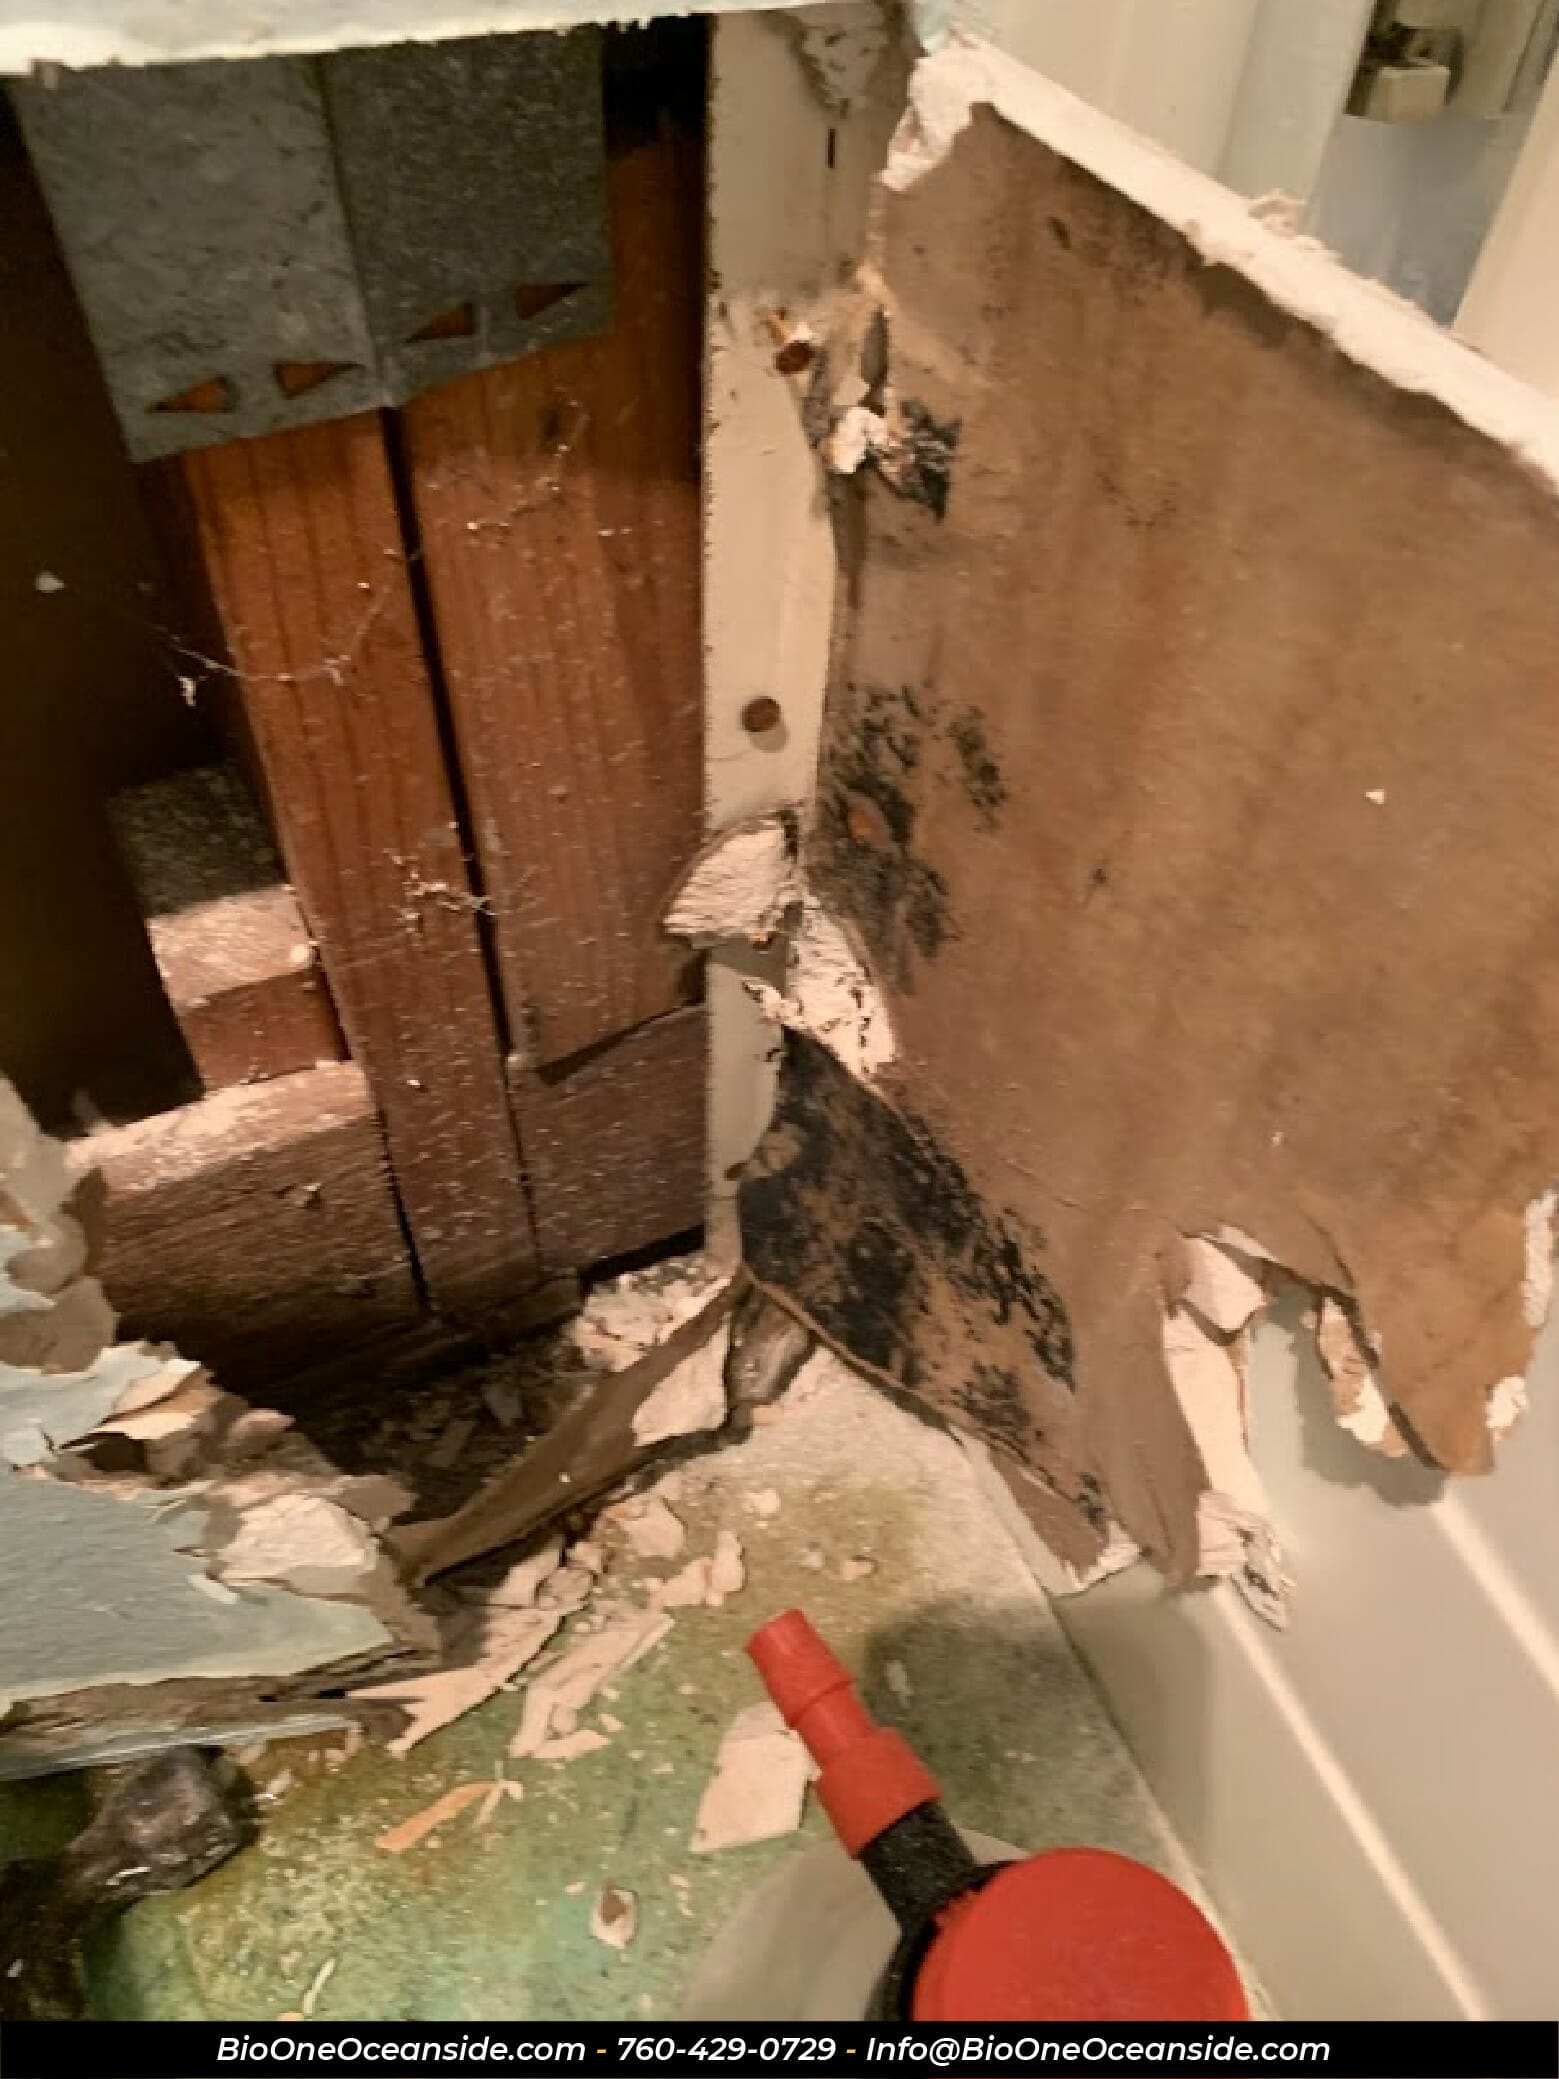 Mold damage inside drywall panels. Photo credit: Bio-One of Oceanside.